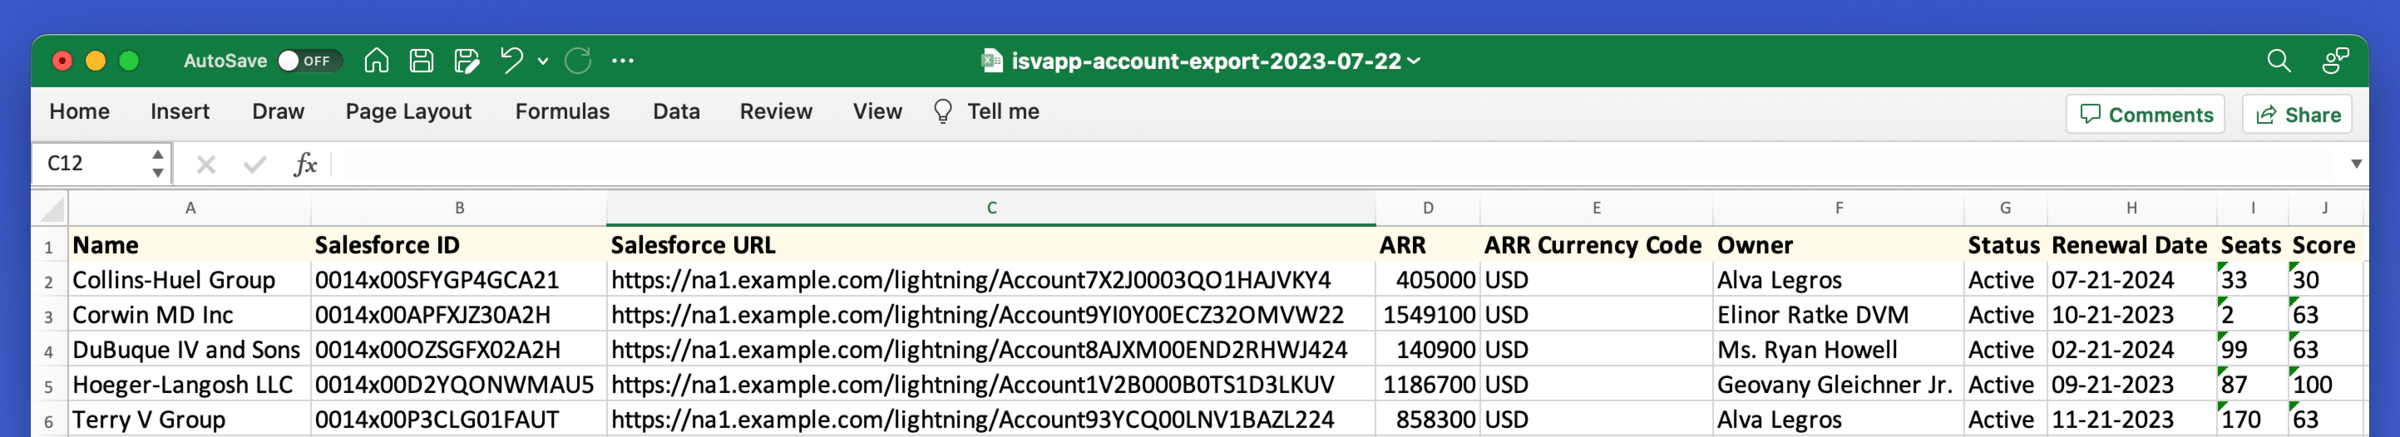 Account Browser Export